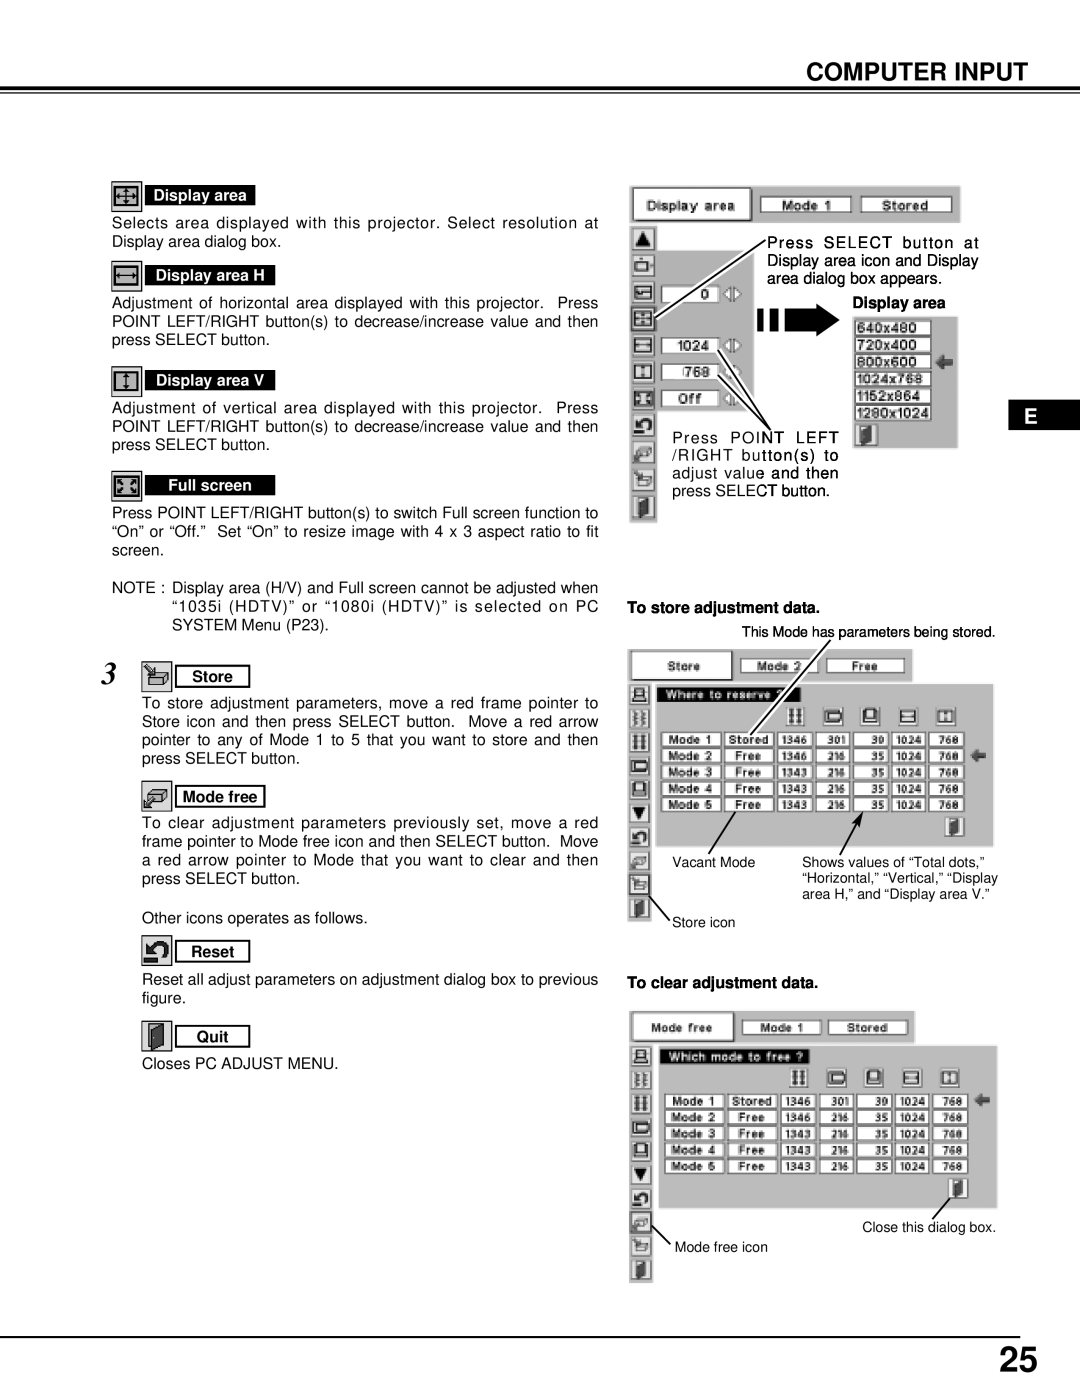 InFocus DP9295 manual Computer Input, Store, Mode free, Reset, Quit, Display area, To store adjustment data 